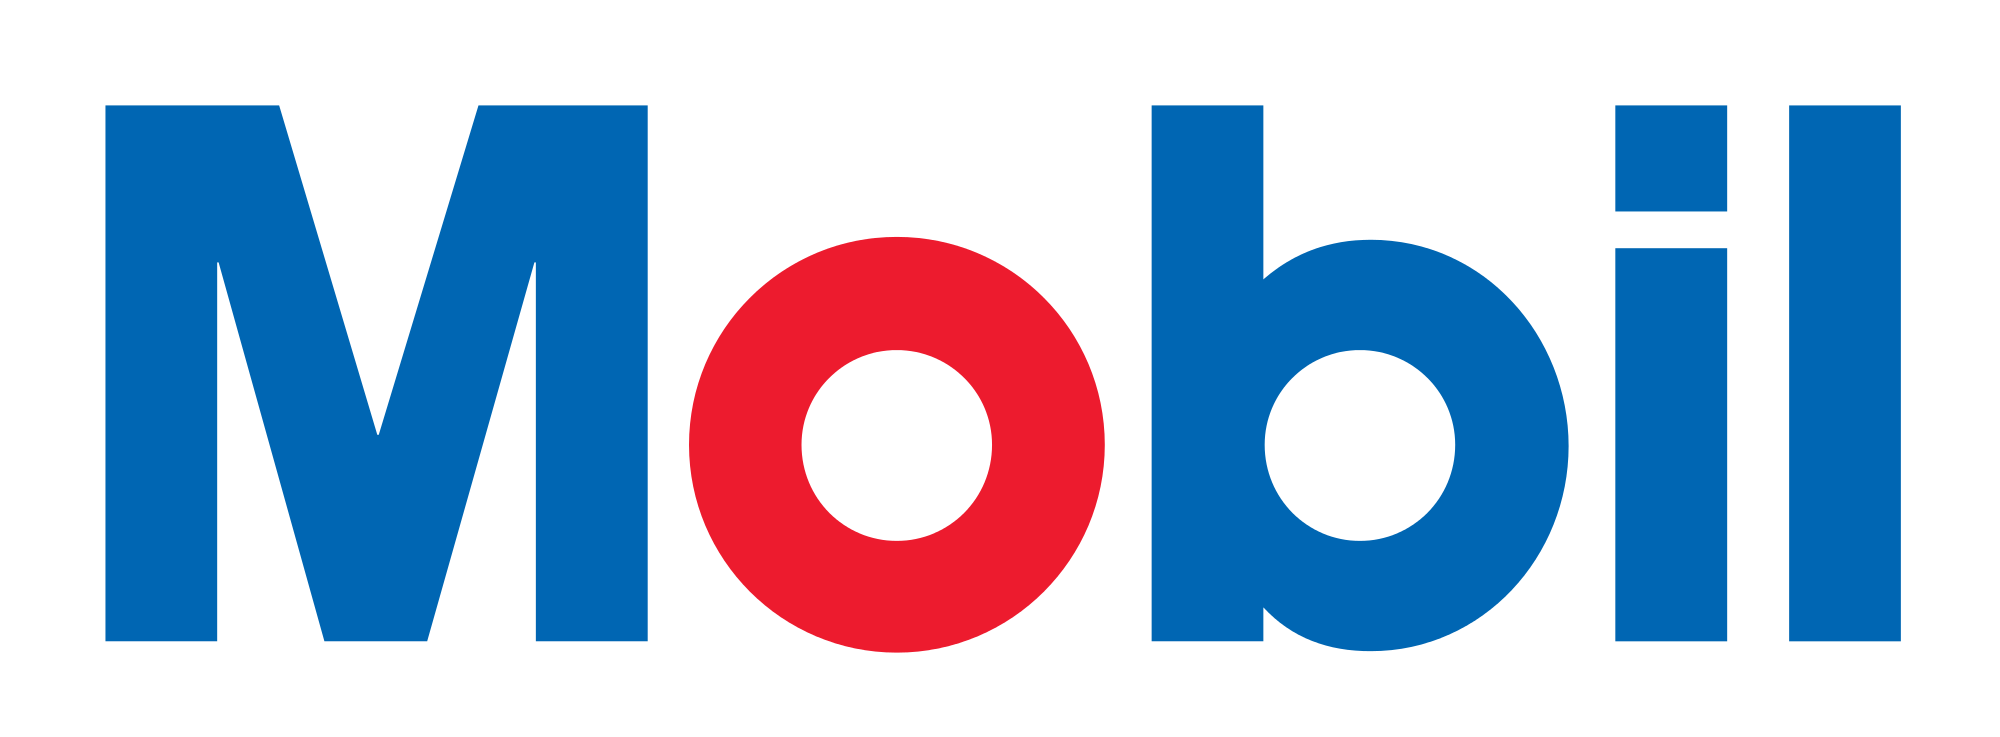 ExxonMobil Logo PNG Images HD